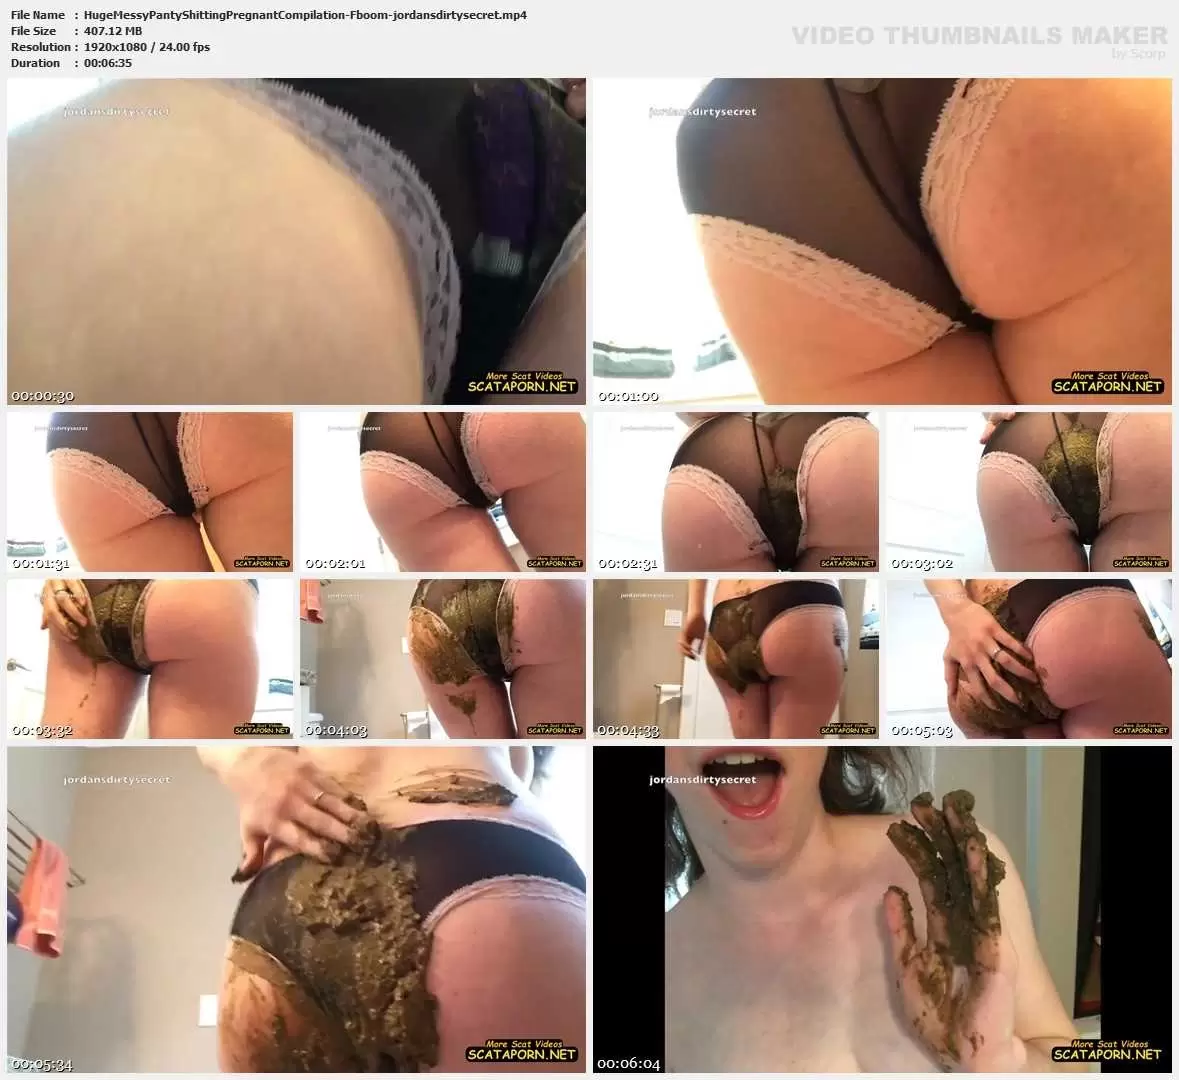 Huge Messy Panty Shitting Pregnant Compilation - Fboom - jordansdirtysecret